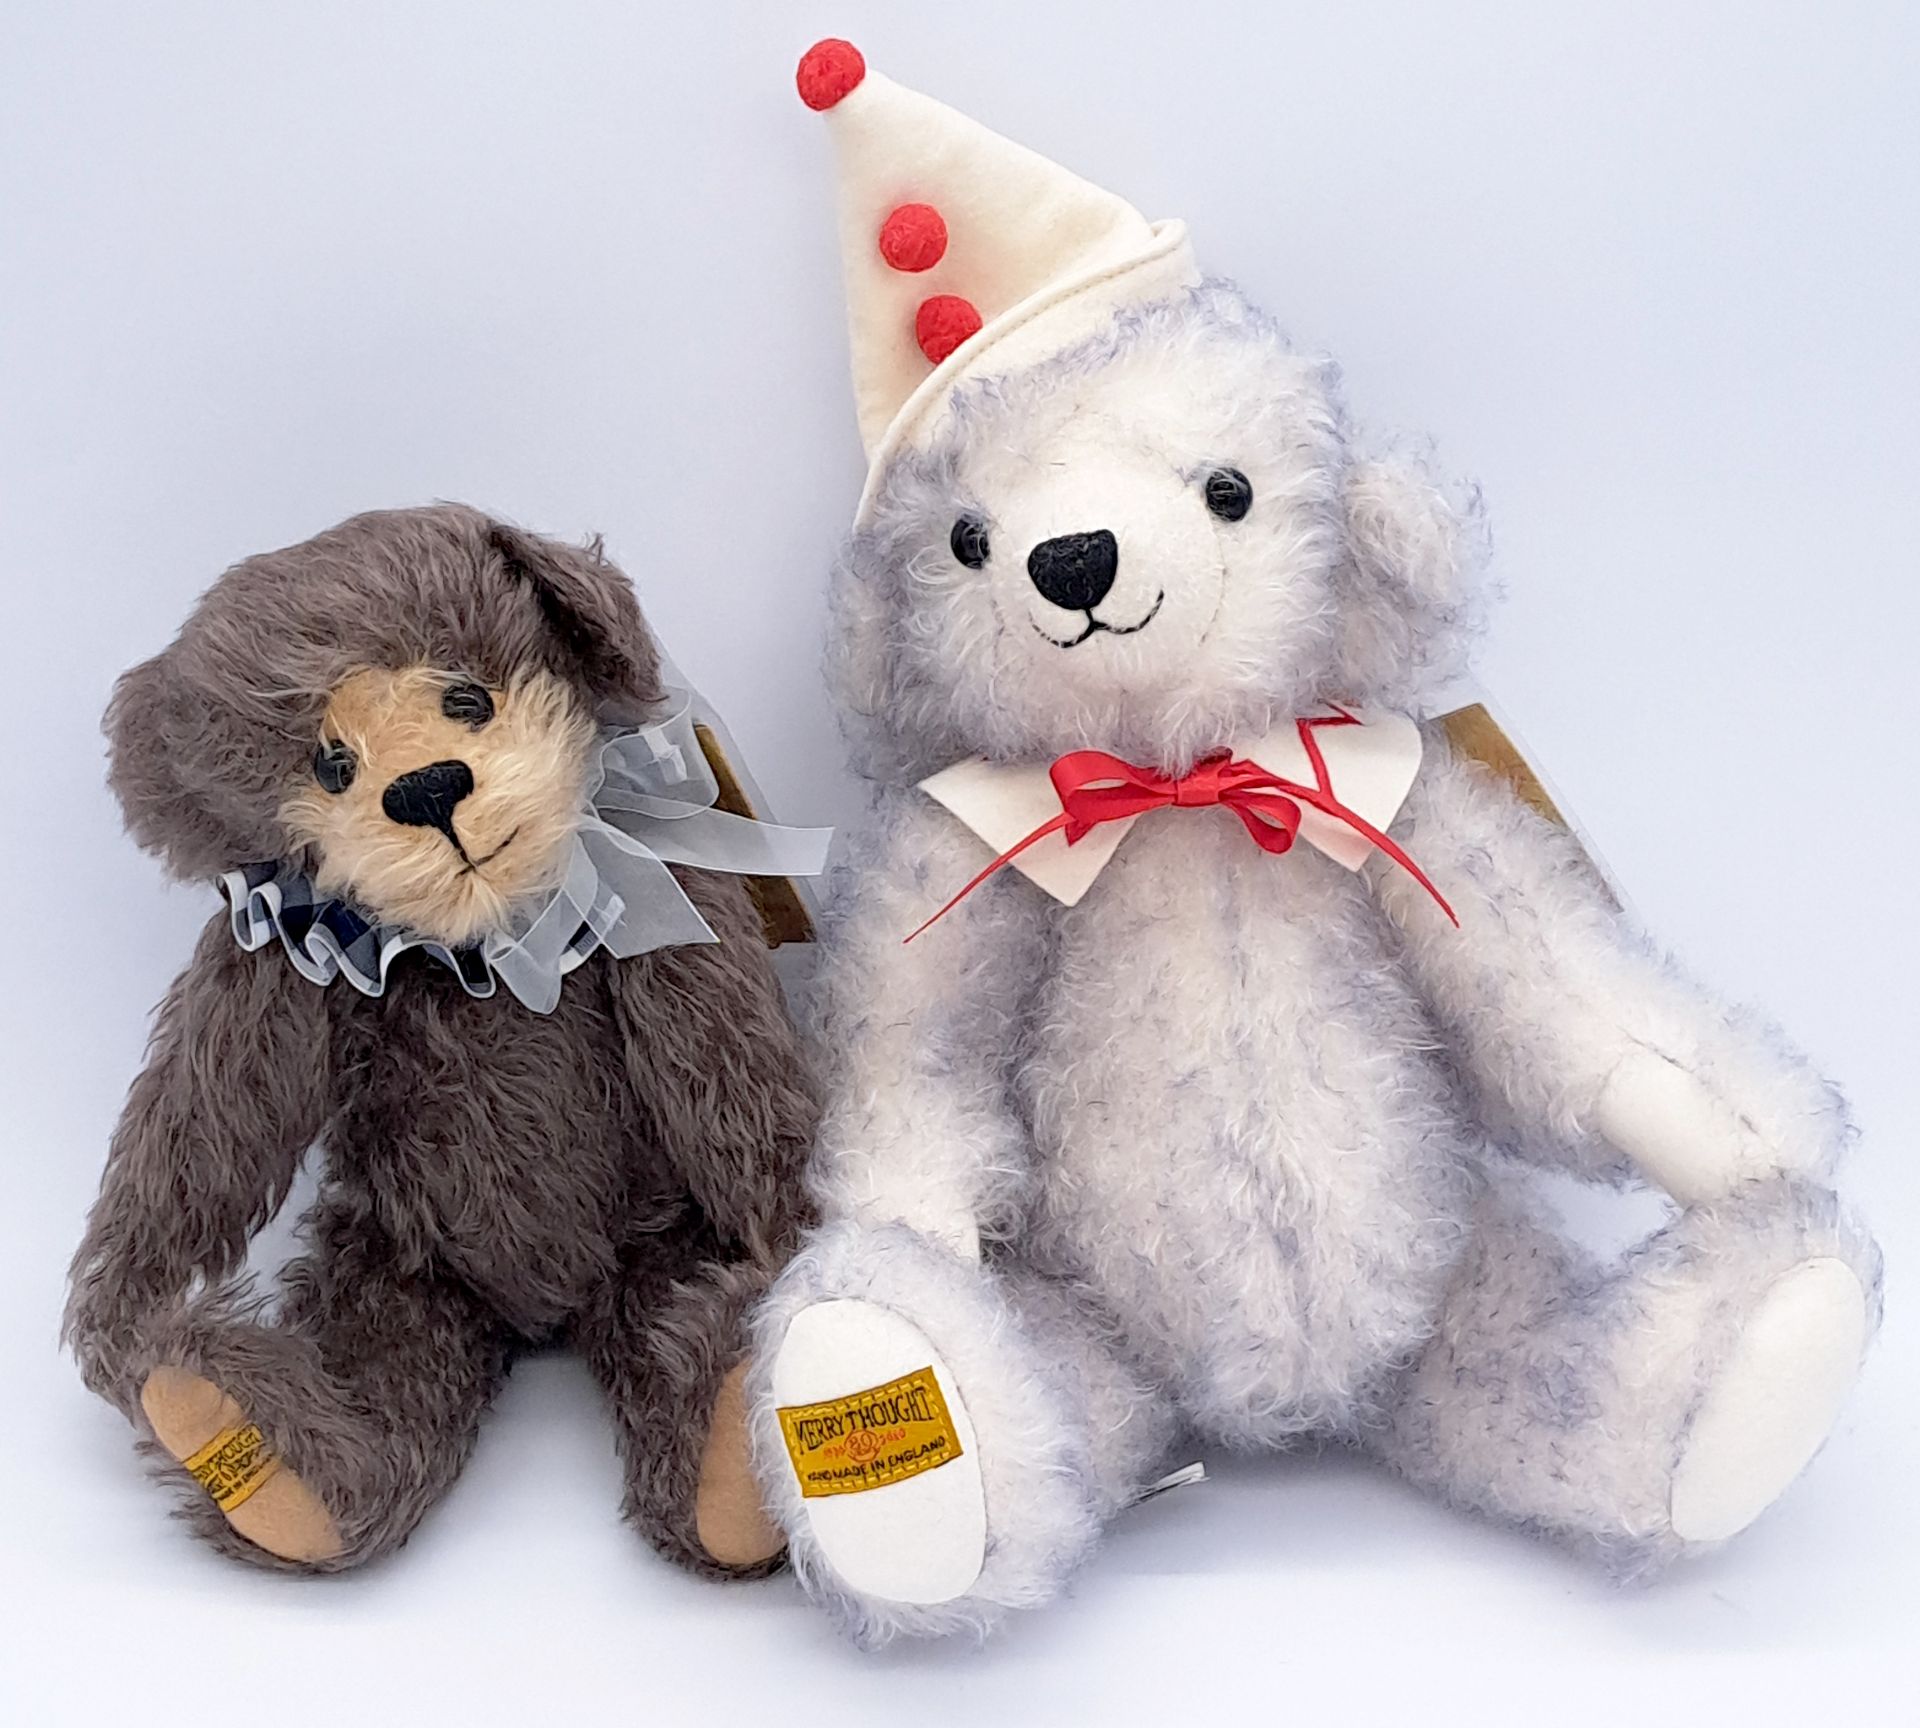 Merrythought pair of mohair teddy bears